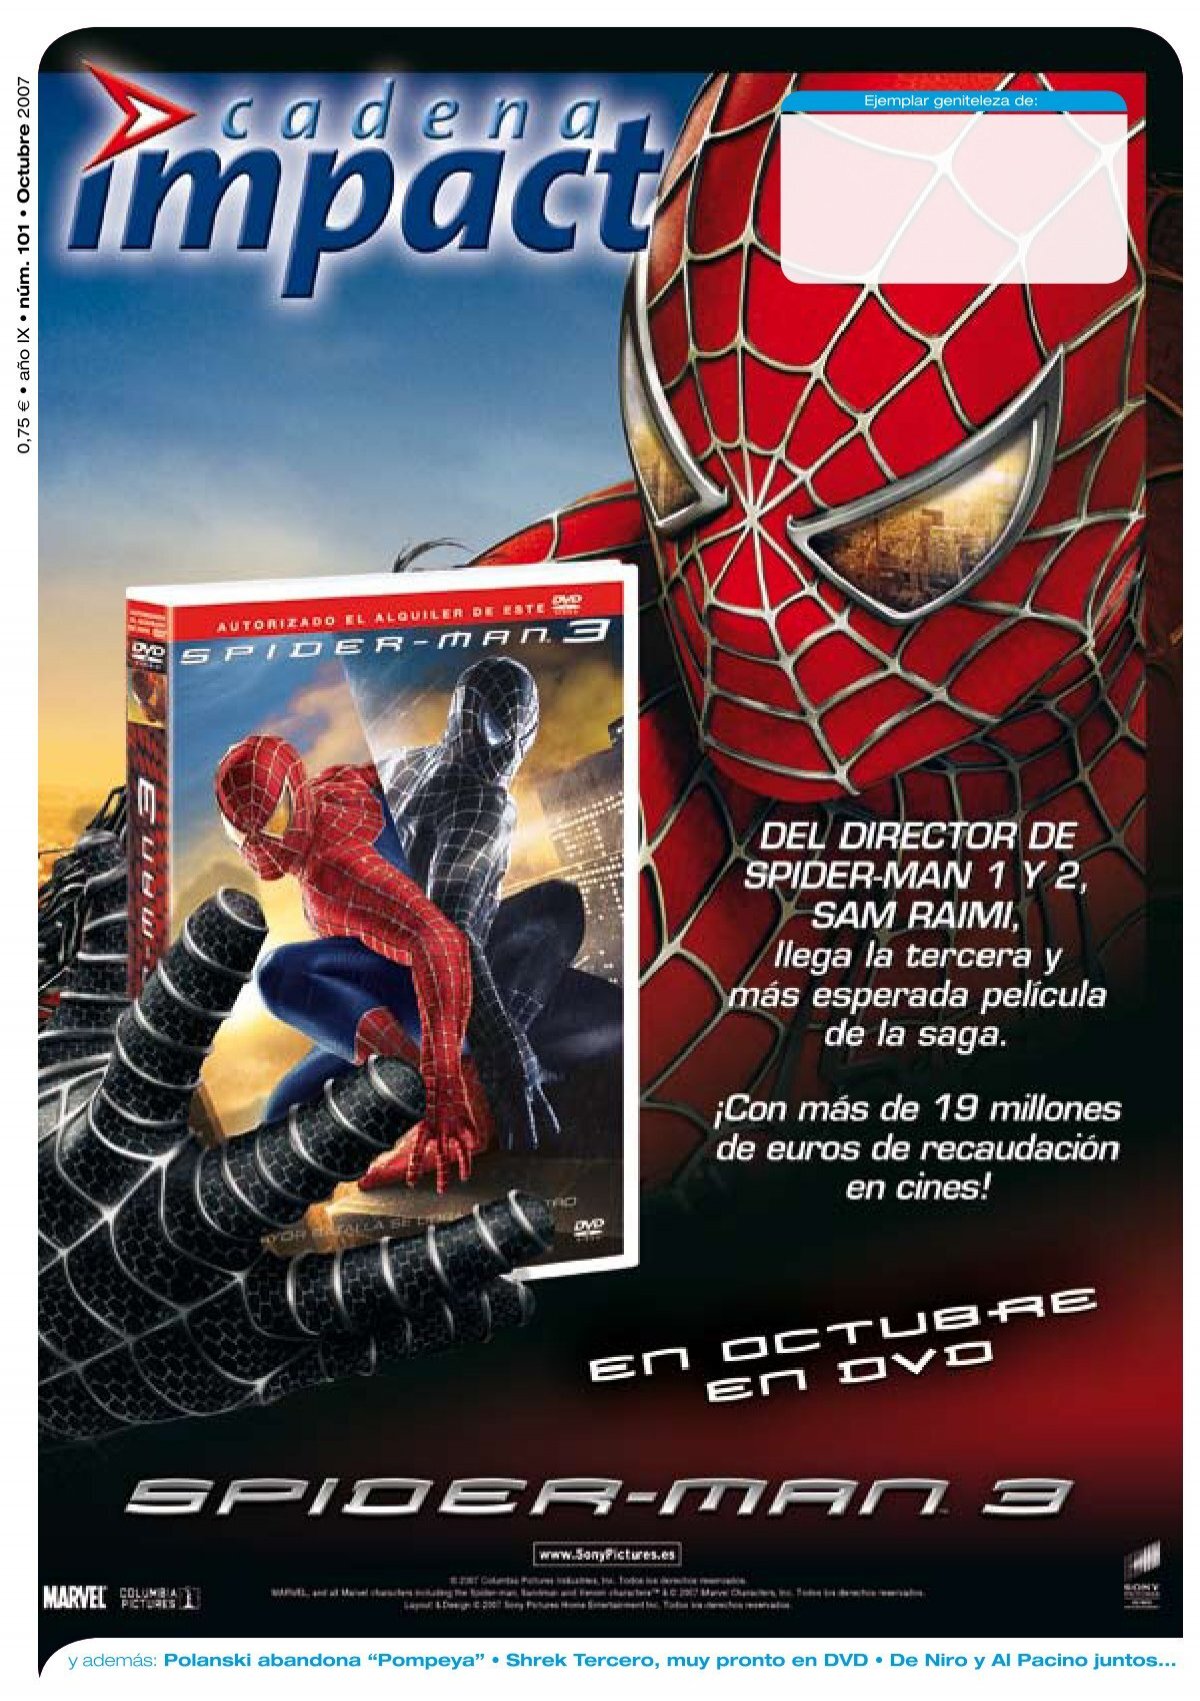 Desvelamos las mecánicas de Marvel's Spider-Man 2 – PlayStation